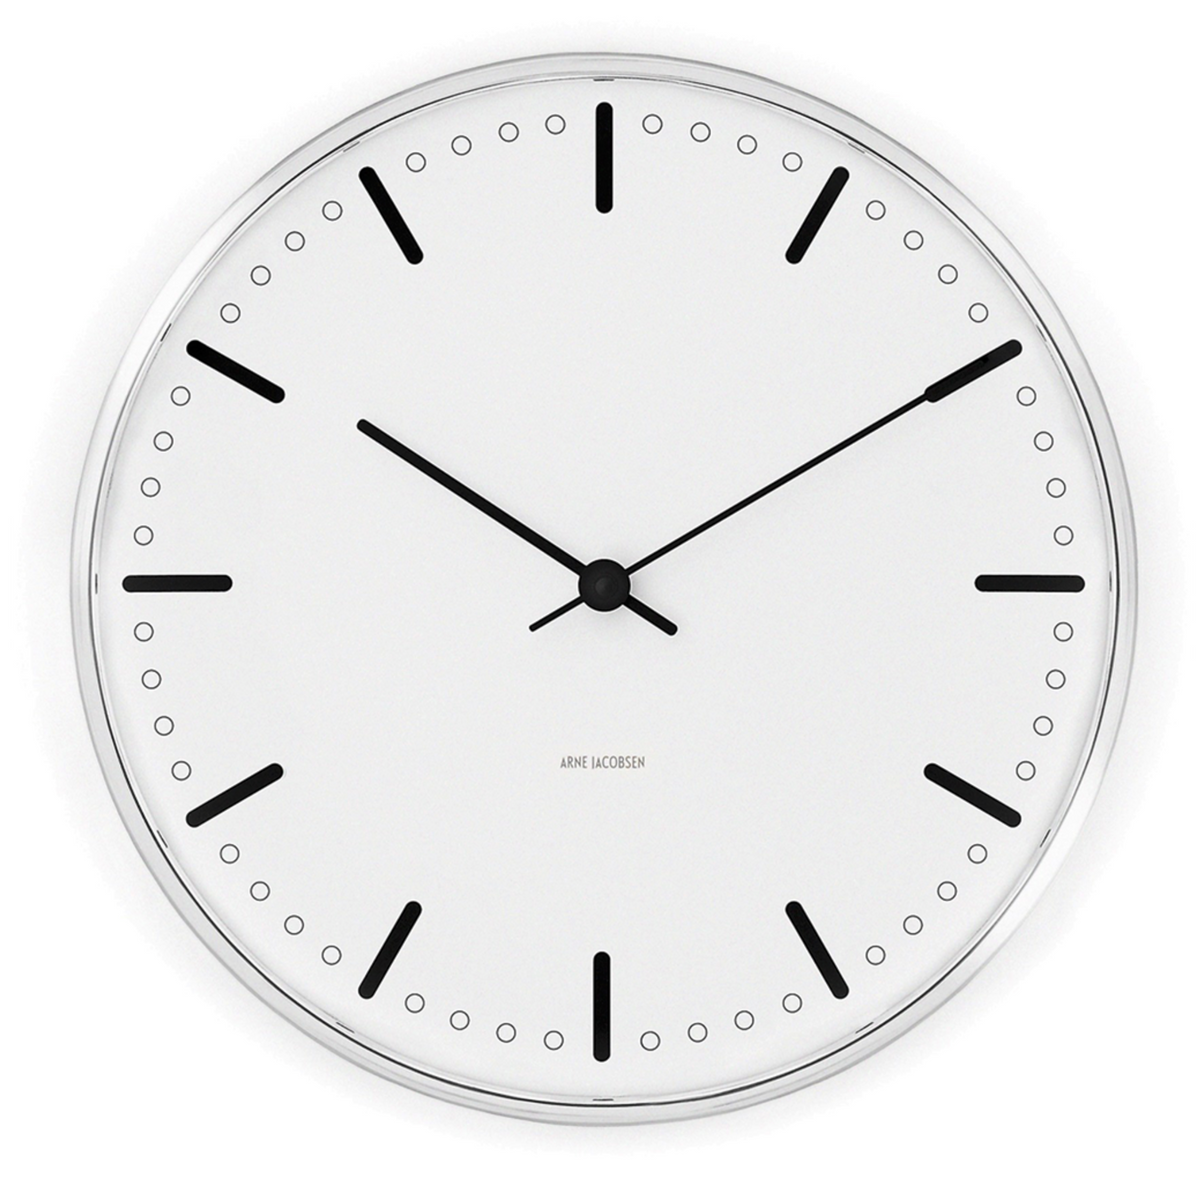 Arne Jacobsen - City Hall Wall Clock